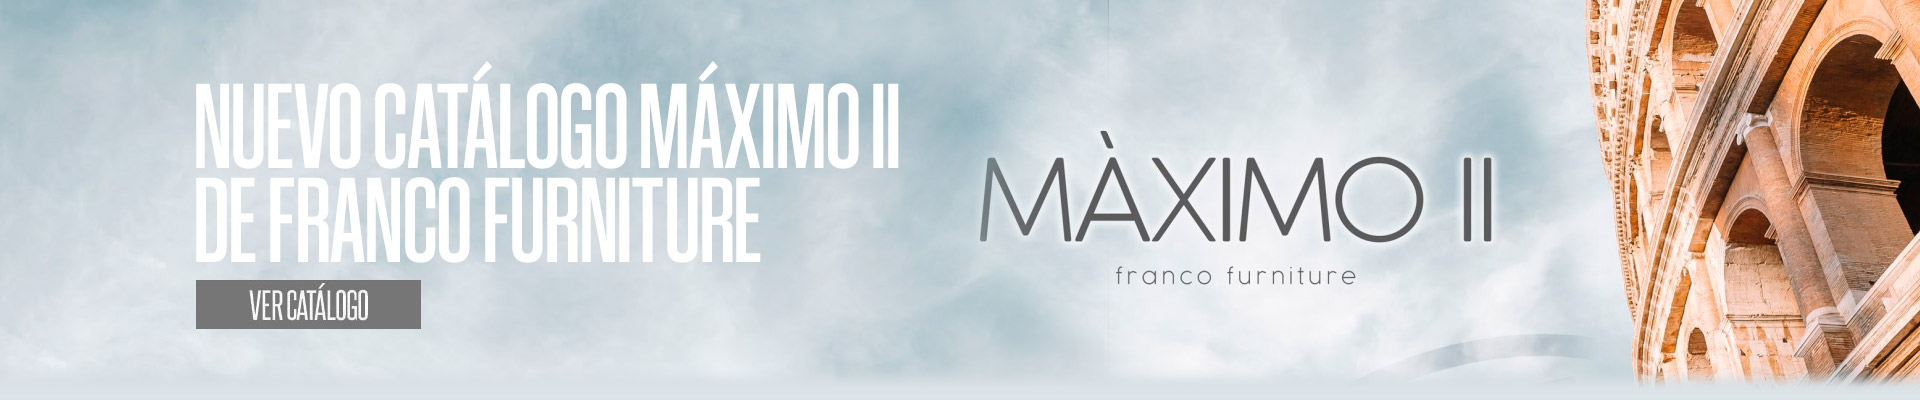 banner maximo ii franco furniture